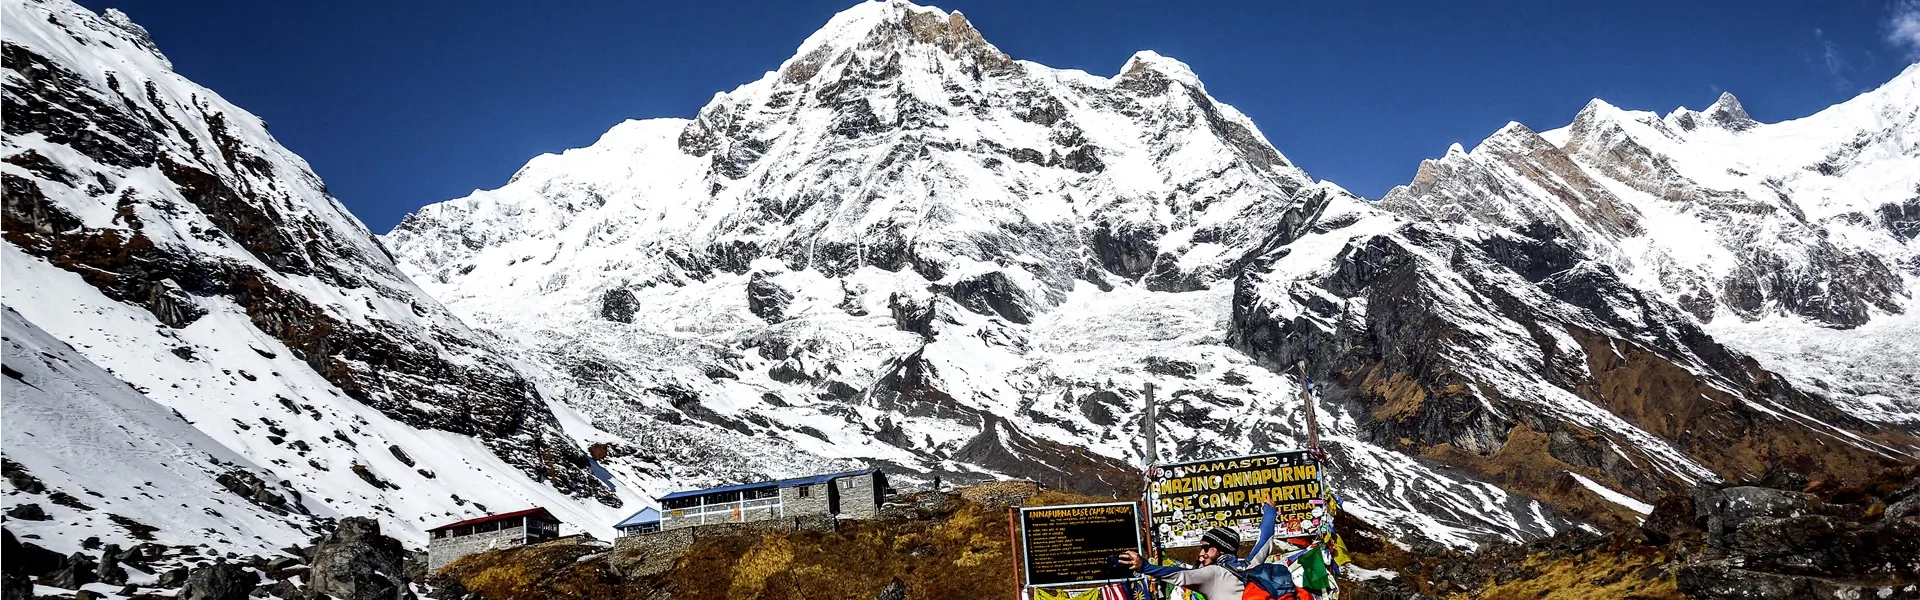 Annapurna Trekking cost for beginners